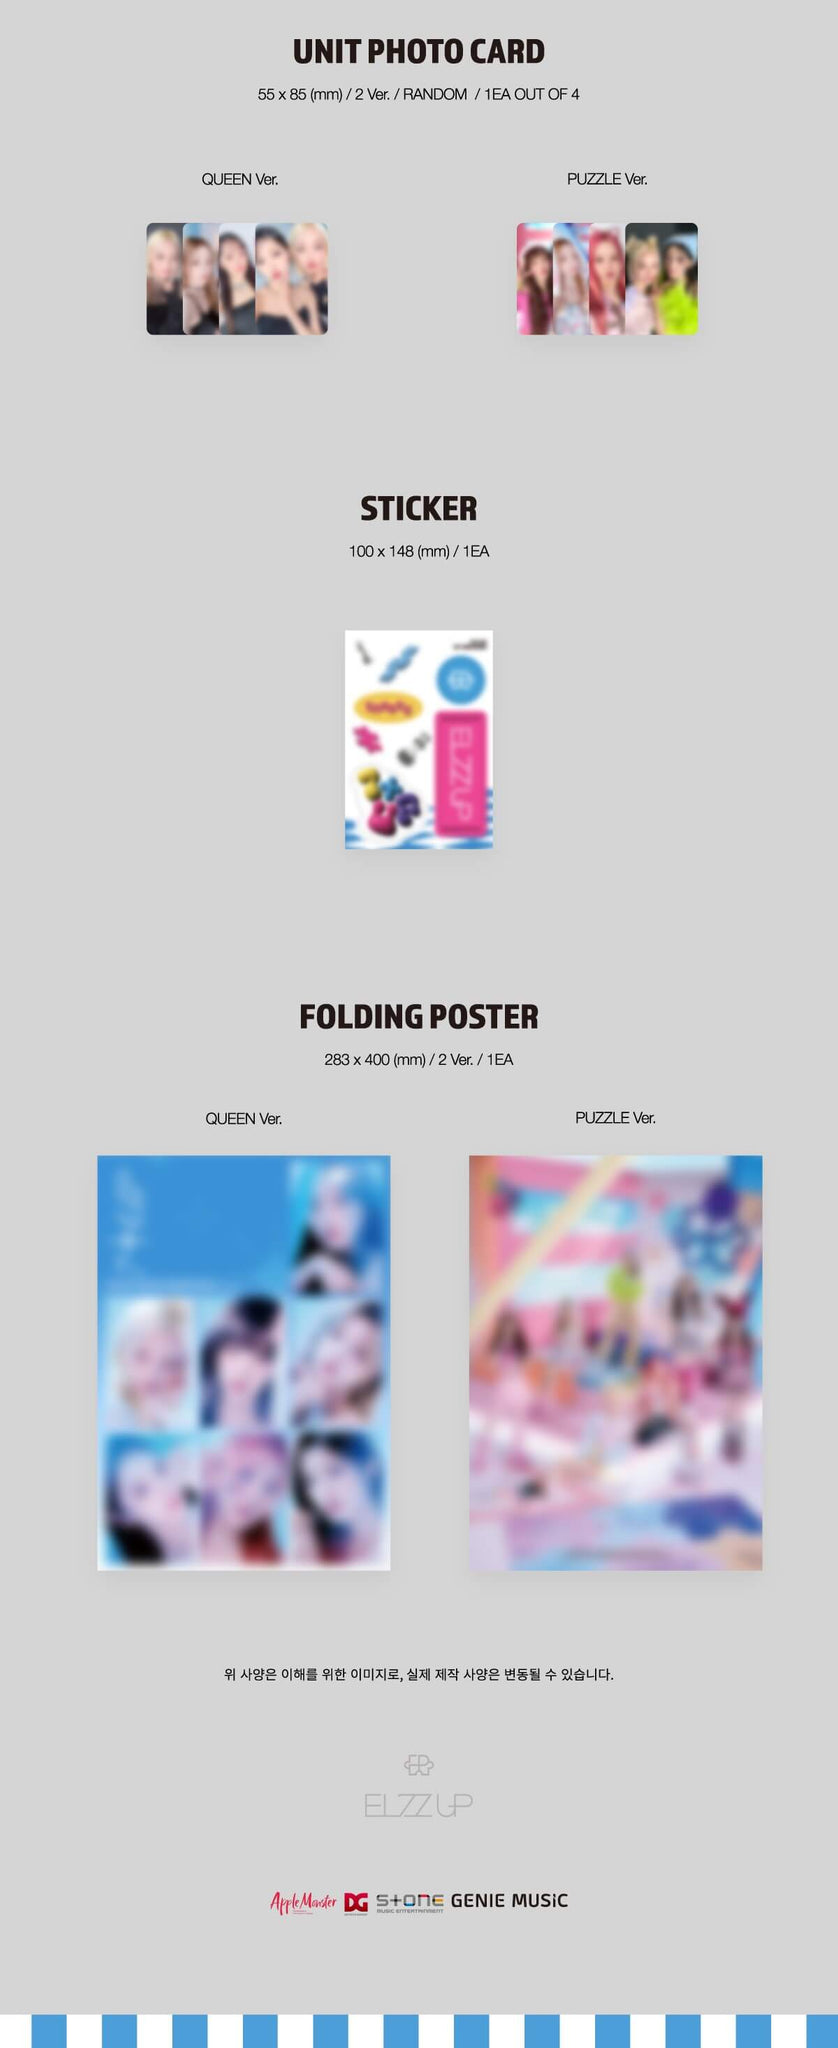 EL7Z UP 1st Mini Album 7+UP Inclusions Unit Photocard Sticker Folding Poster